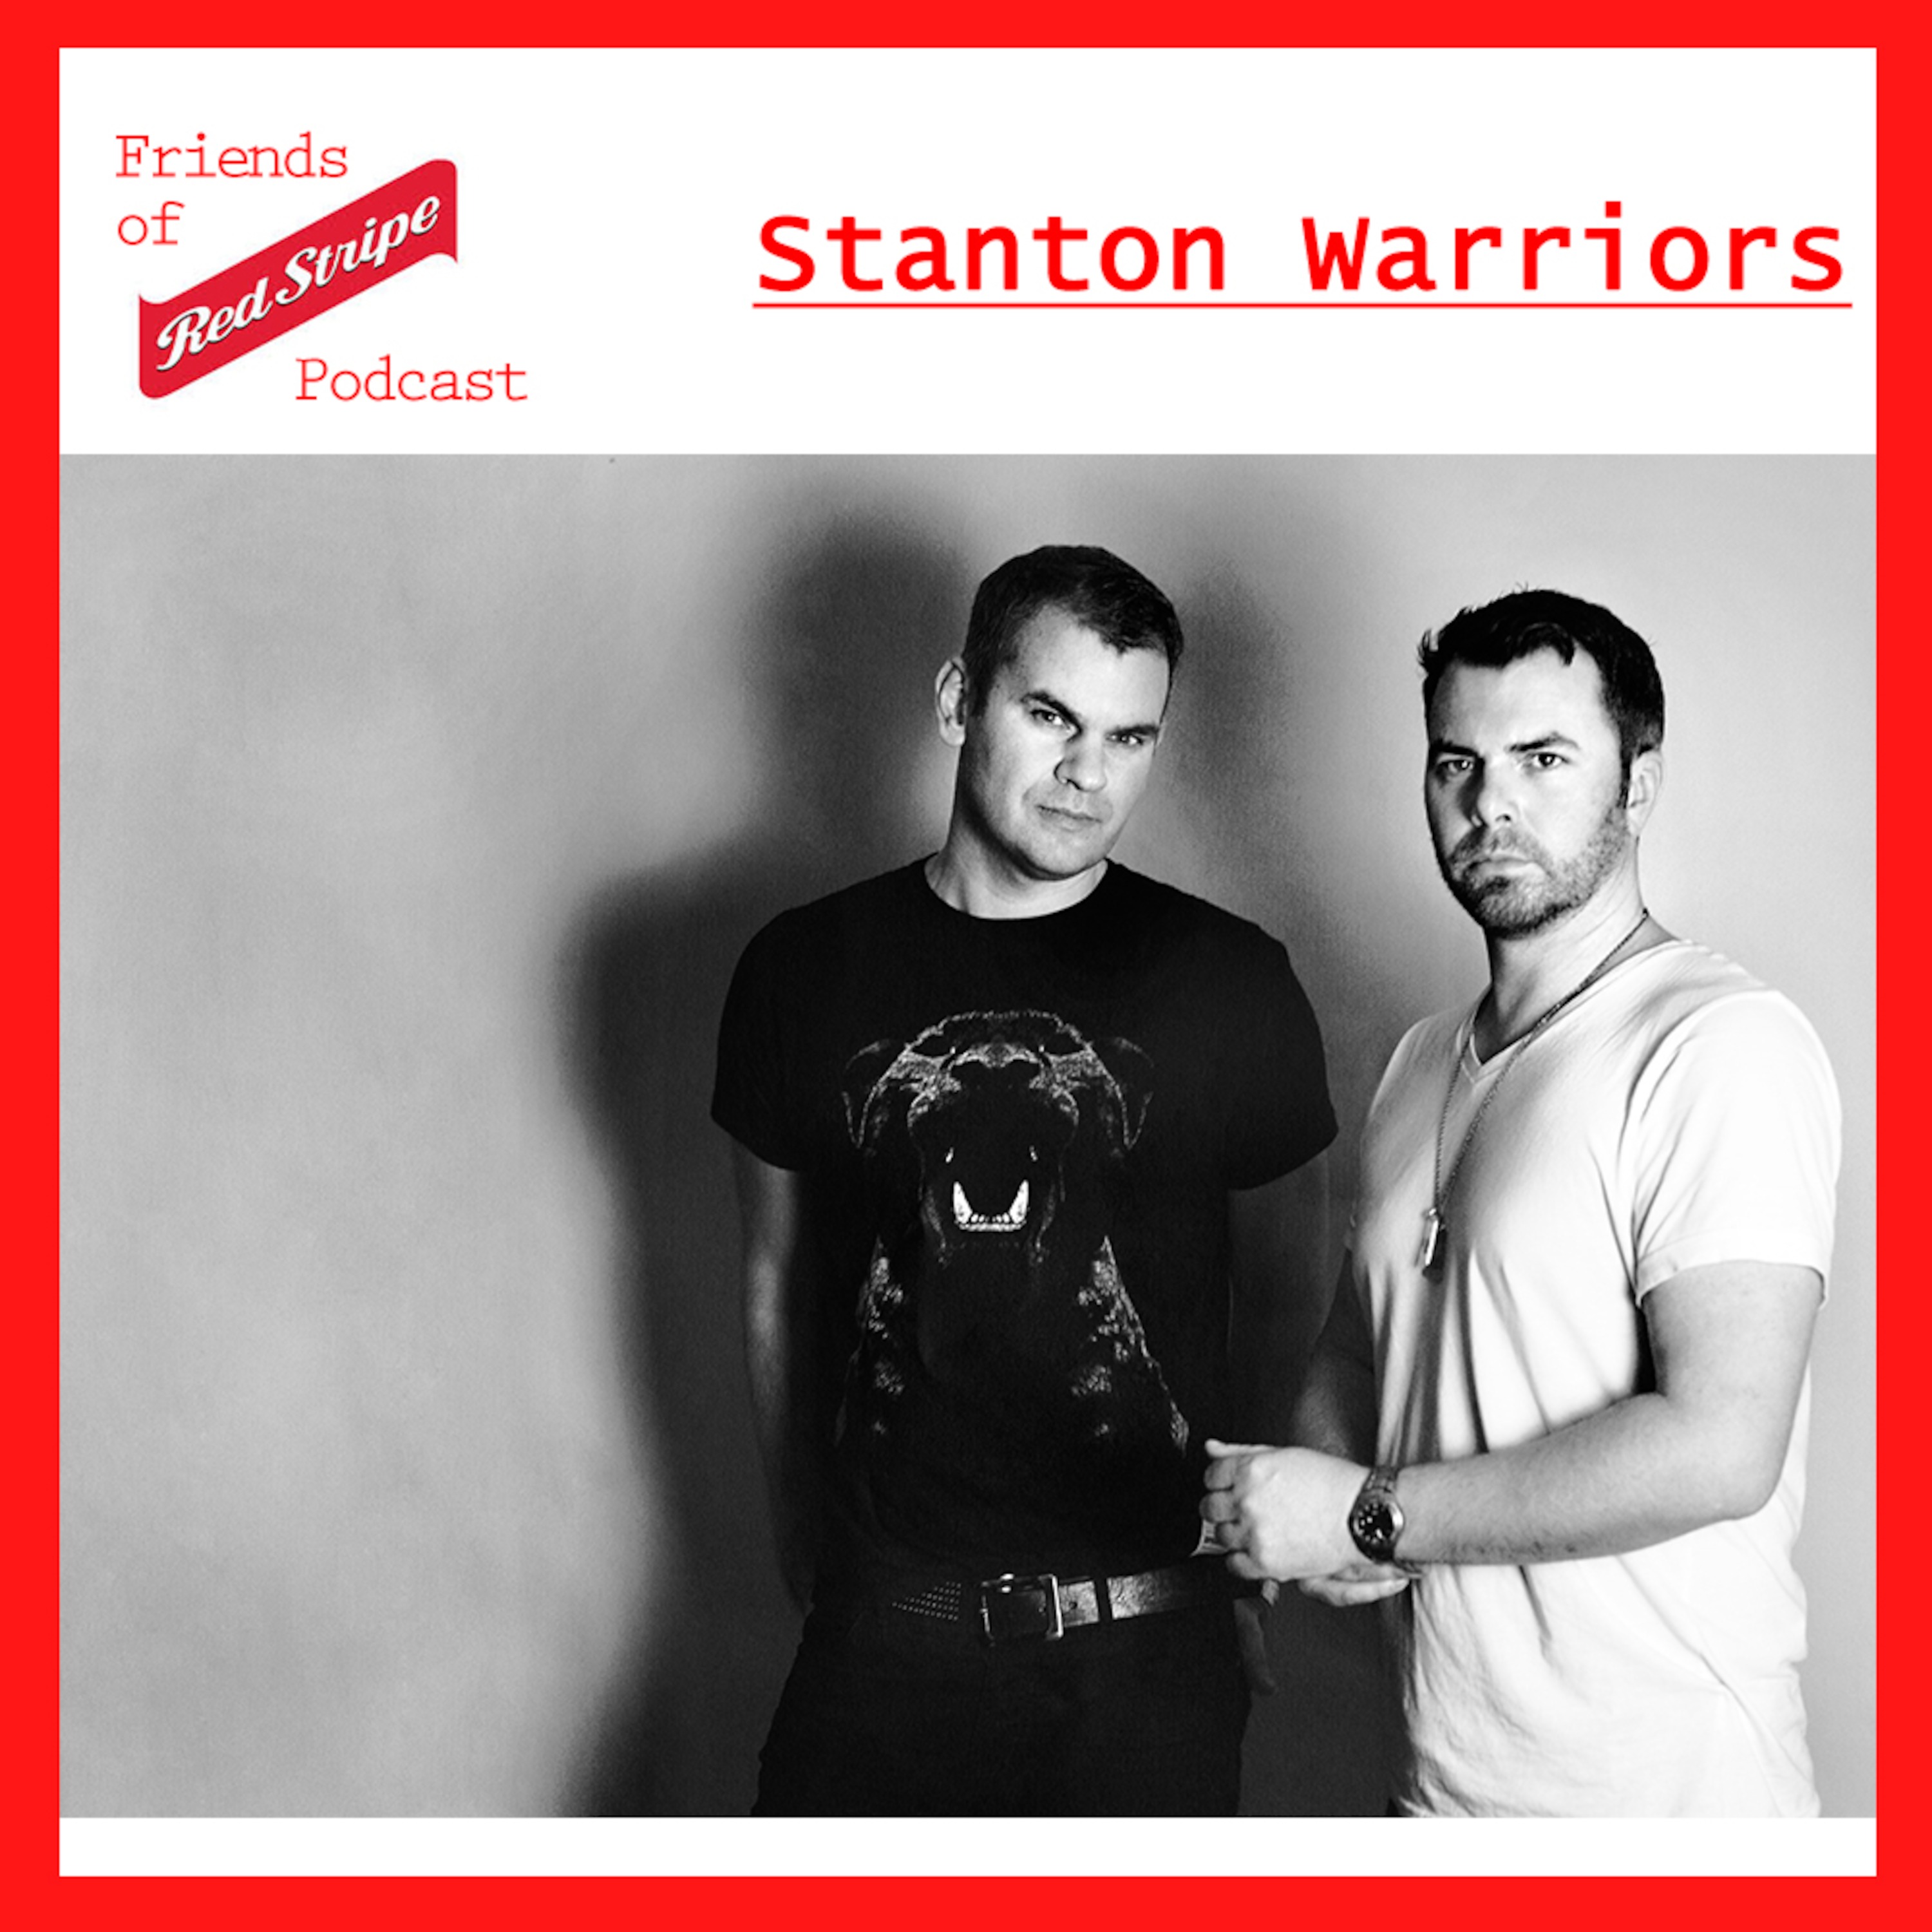 Stanton warriors. Stanton Warrior фото. Stanton Warriors биография. "Stanton Warriors" && ( исполнитель | группа | музыка | Music | Band | artist ) && (фото | photo).